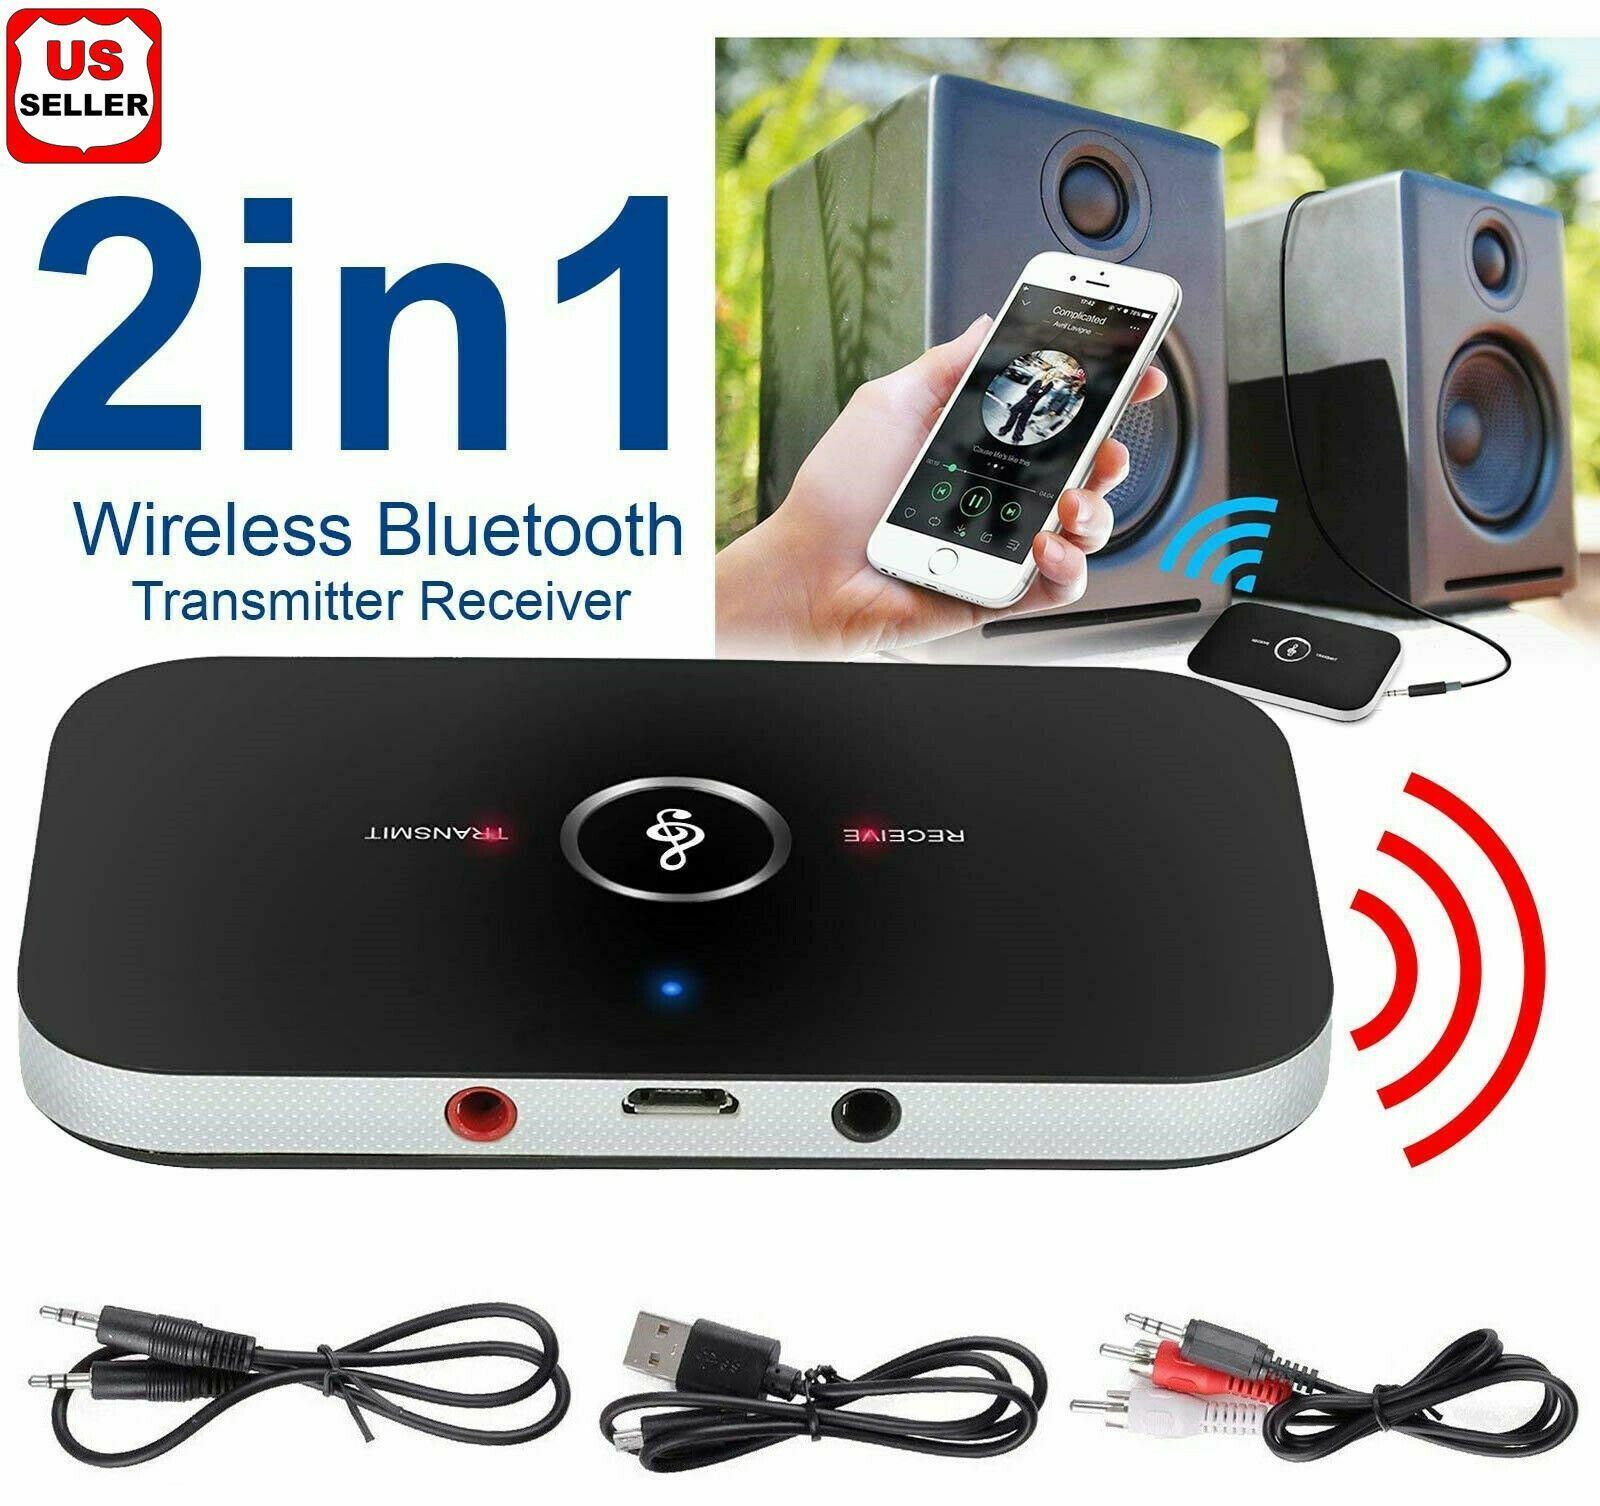 Bluetooth V4 Transmitter & Receiver Wireless A2DP Audio 3.5mm Aux Adapter Hub A6